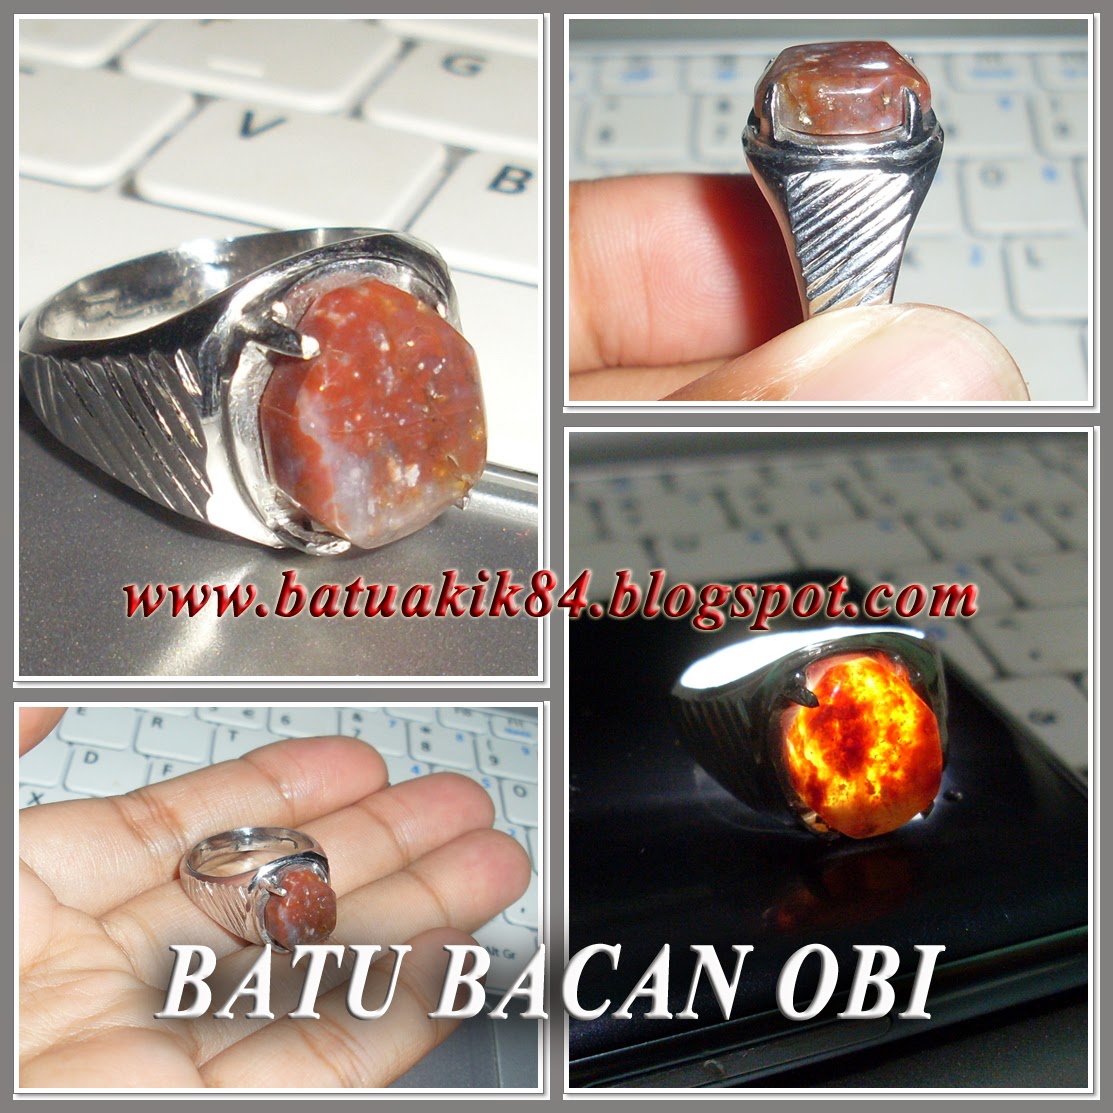 http://batuakik84.blogspot.com/2014/11/batu-bacan-obi.html